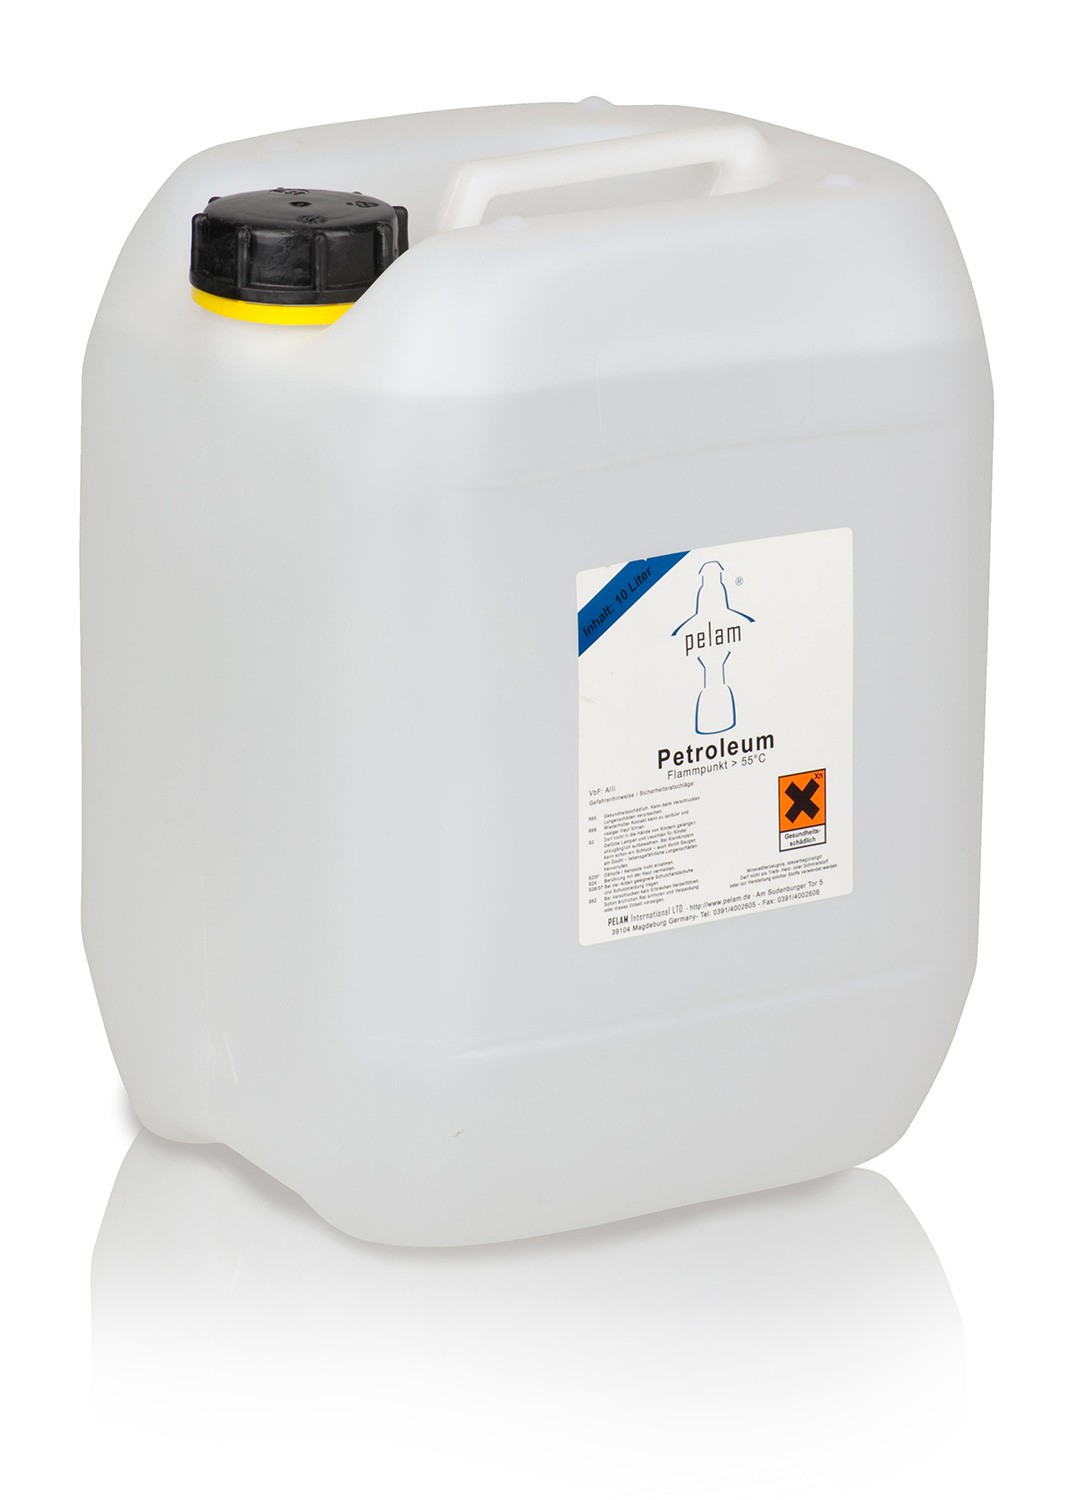 Petromax Pelam Petroleum / 10 Liter Kanister